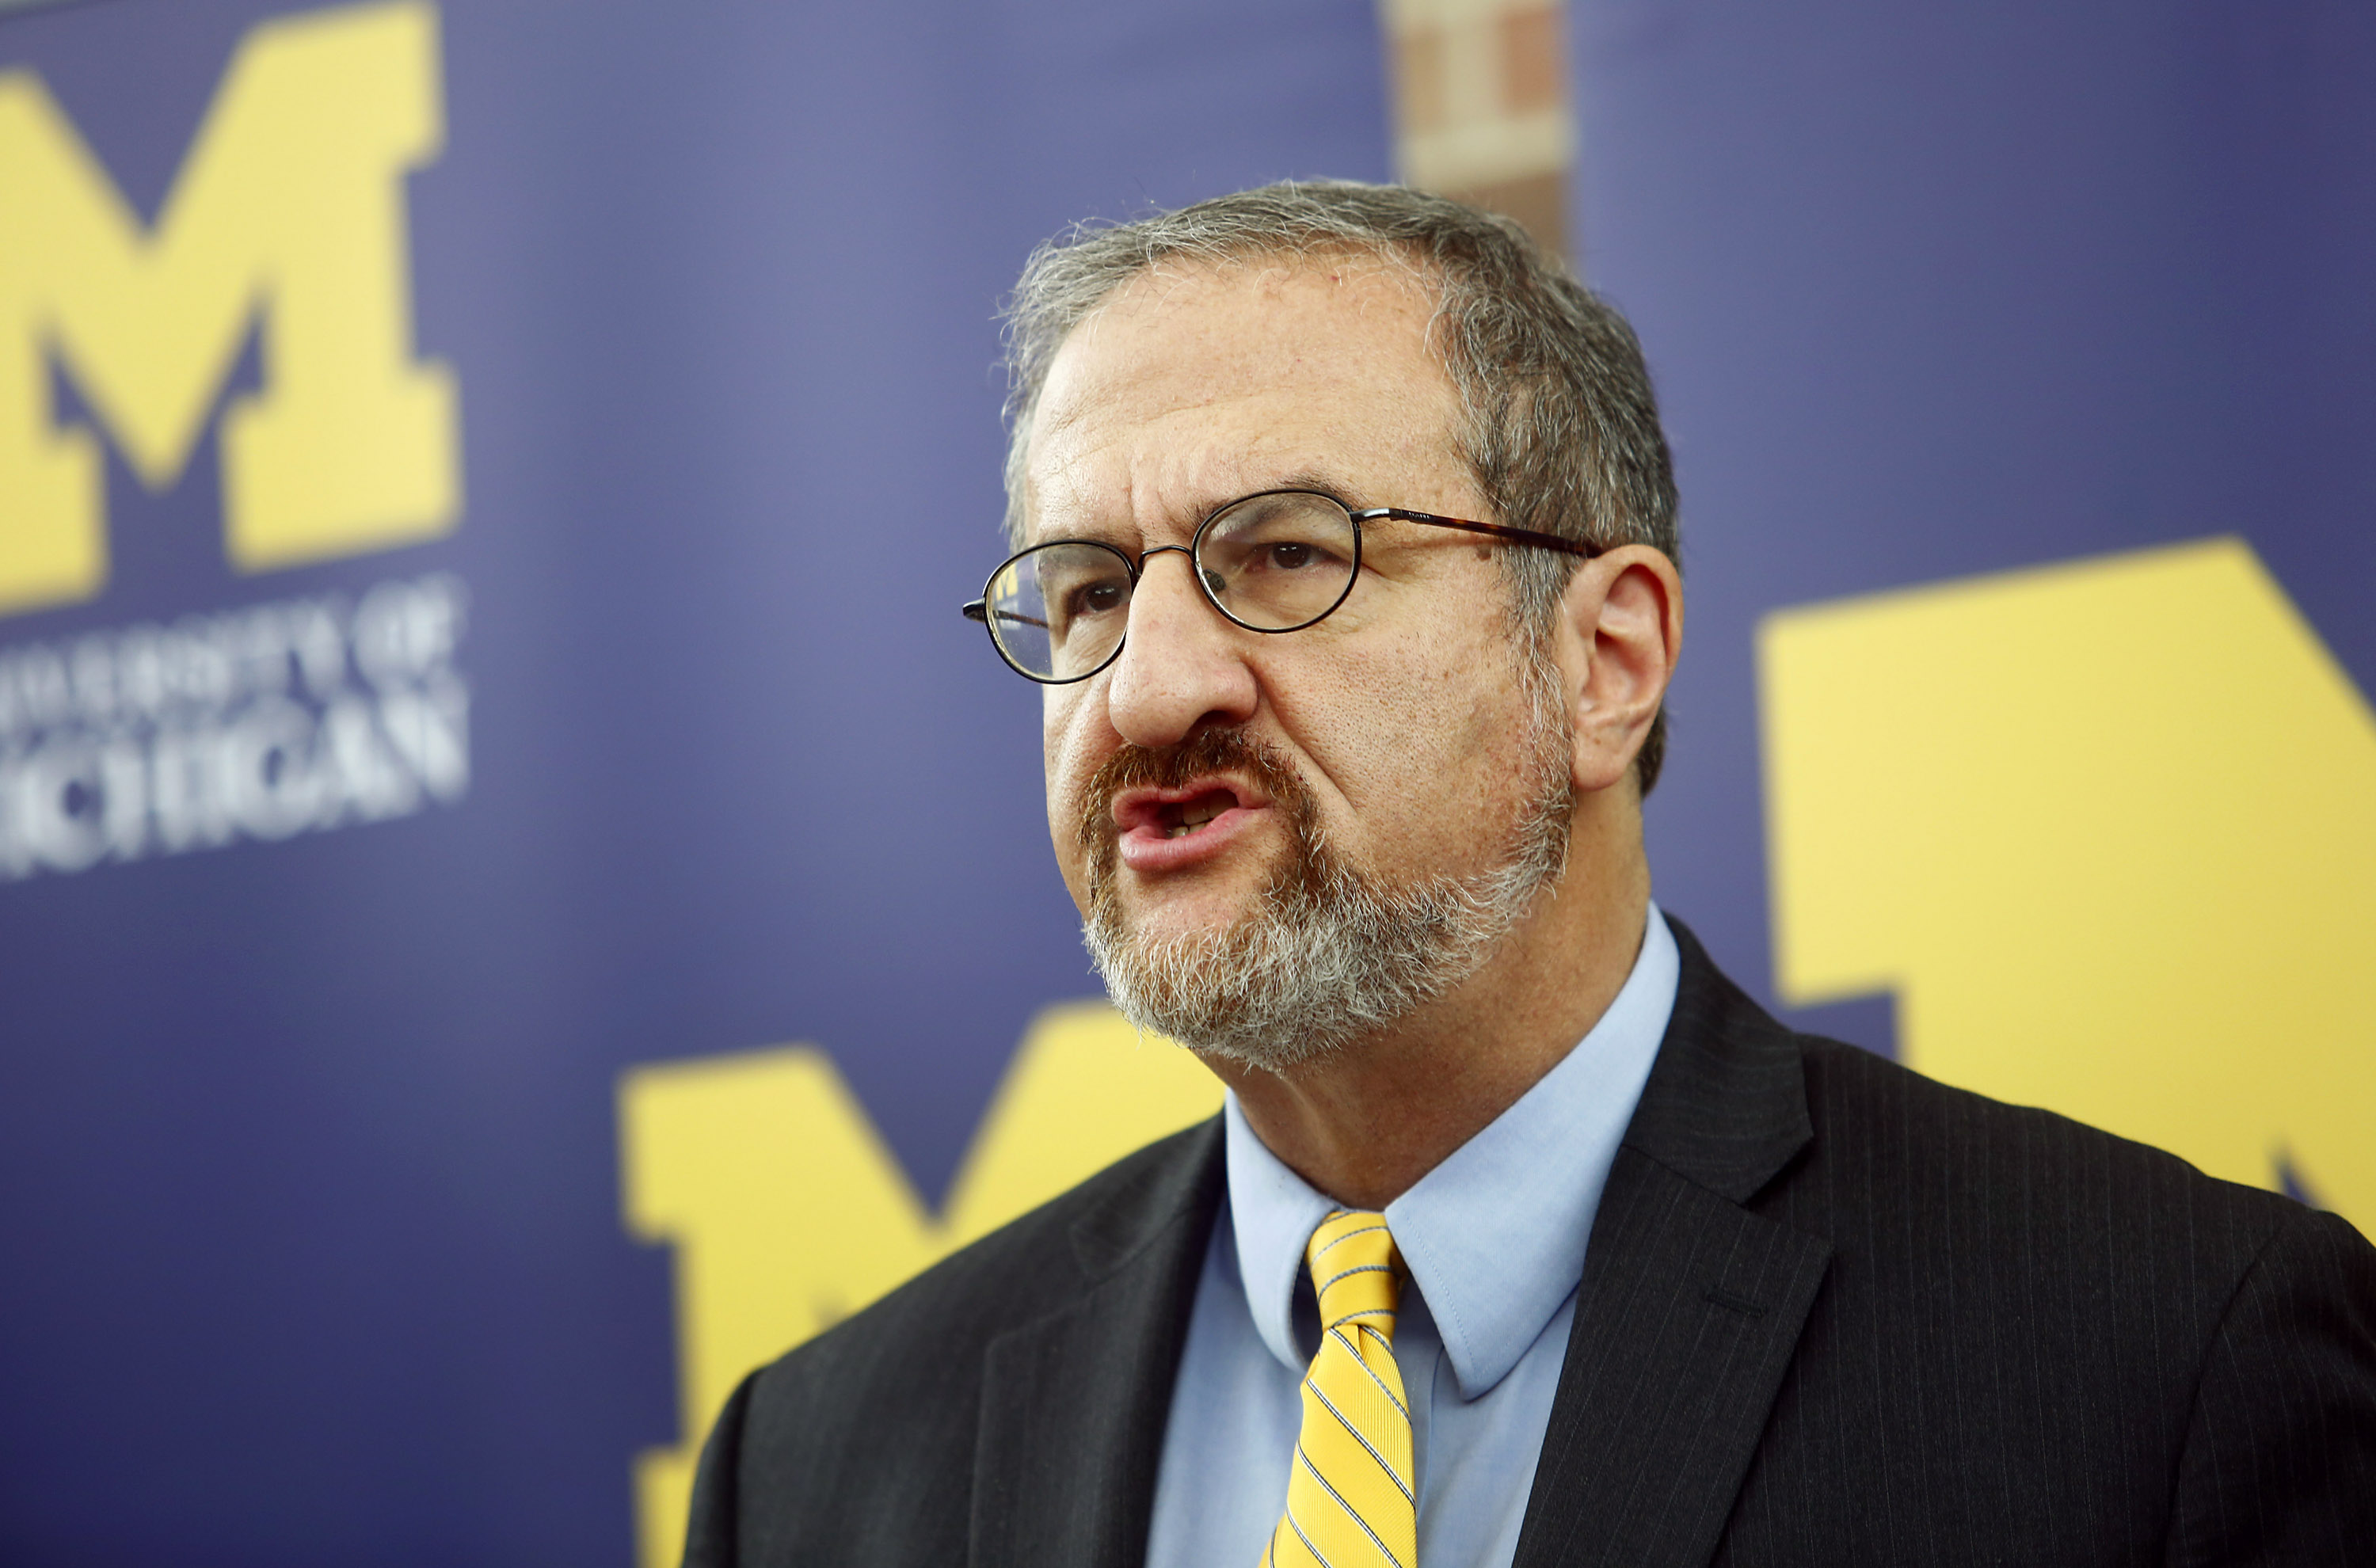 Mark Schlissel, Michigan University President, Fired Over Employee Relationship